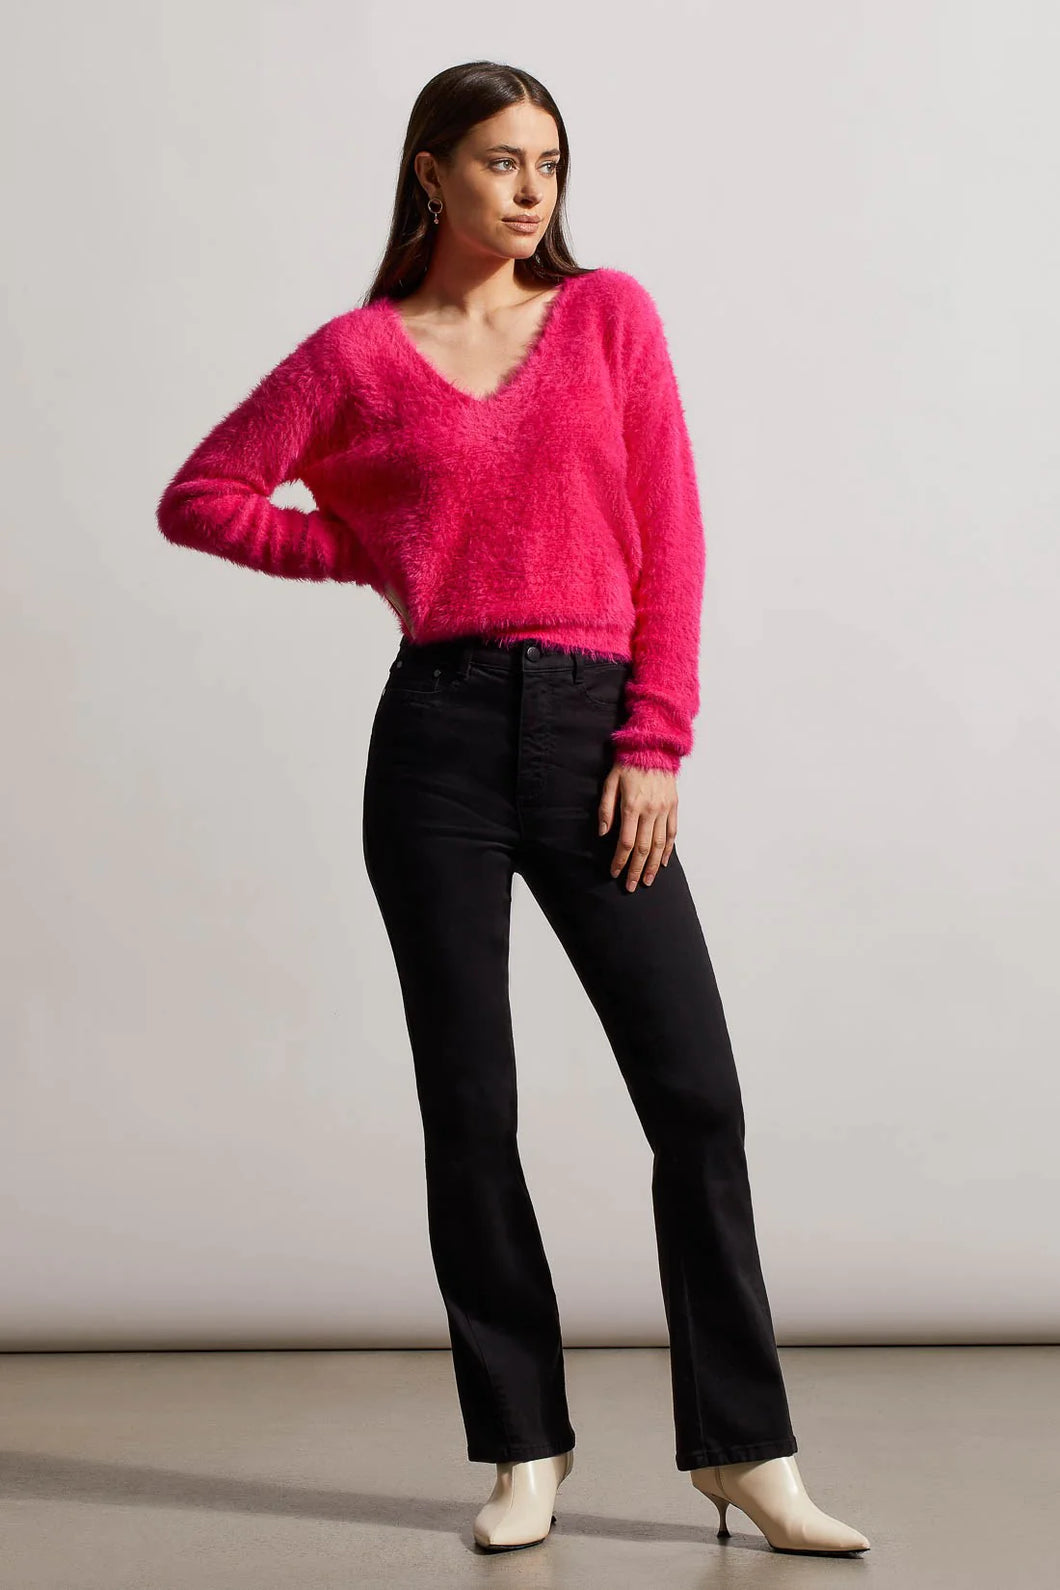 Tribal: V-Neck Sweater in Fuchsia Pink